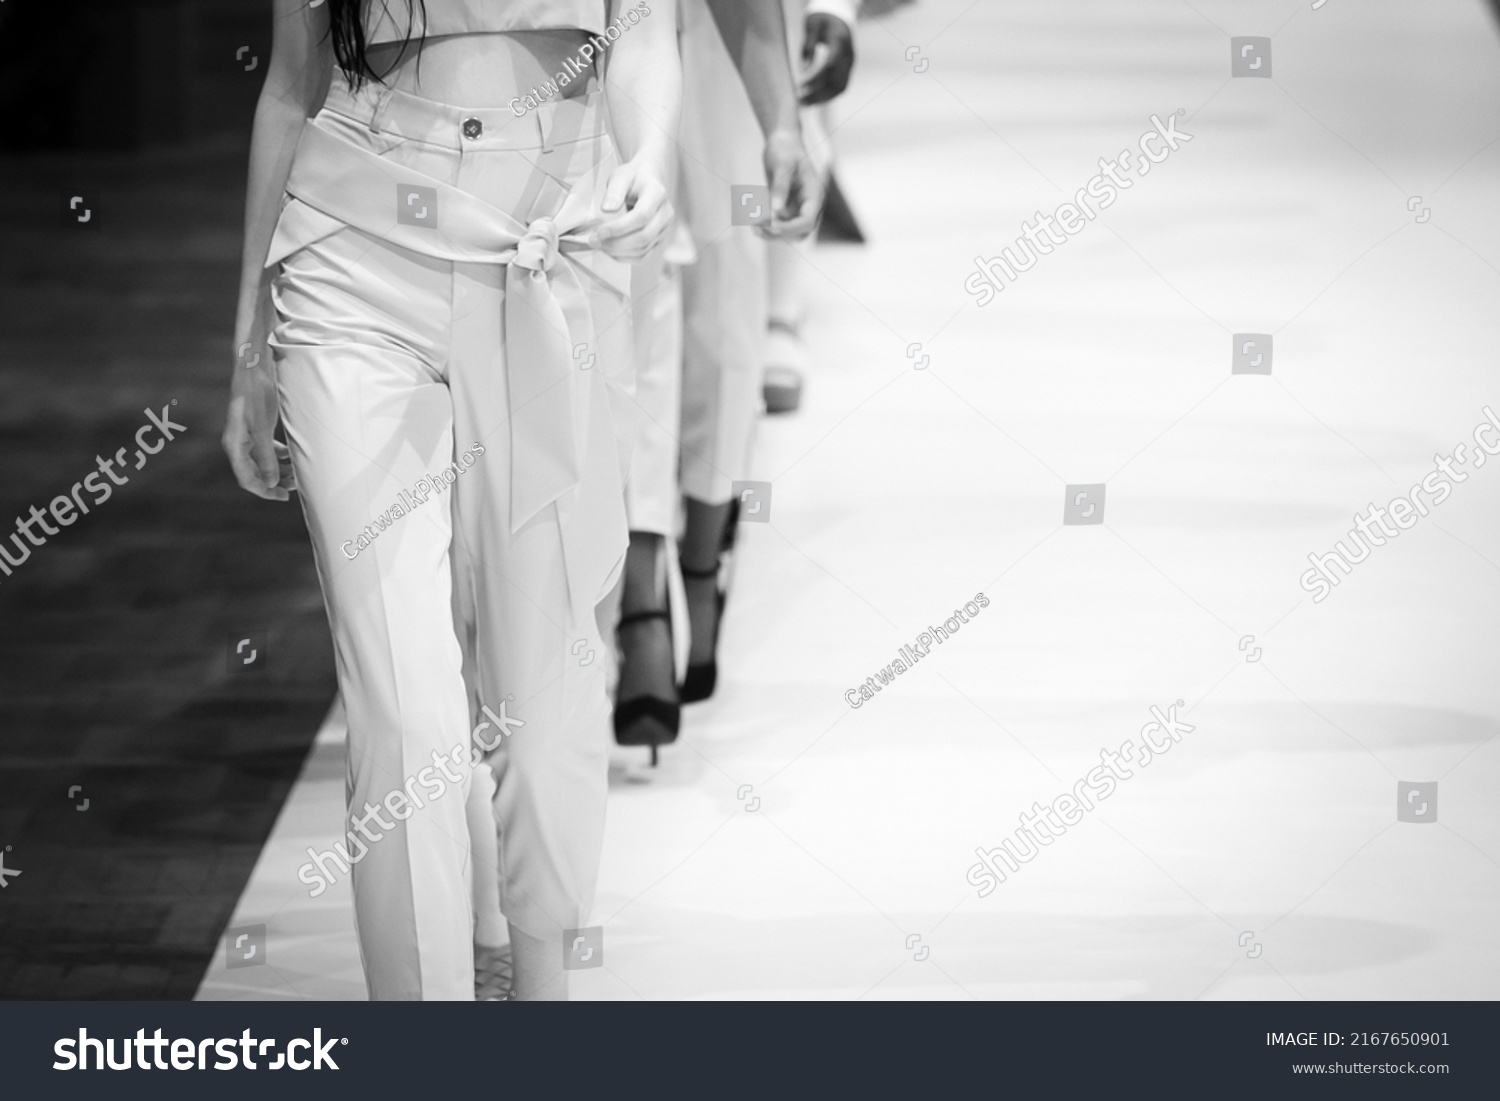 Fashion Show Catwalk Runway Event Model Stock Photo 2167650901 ...